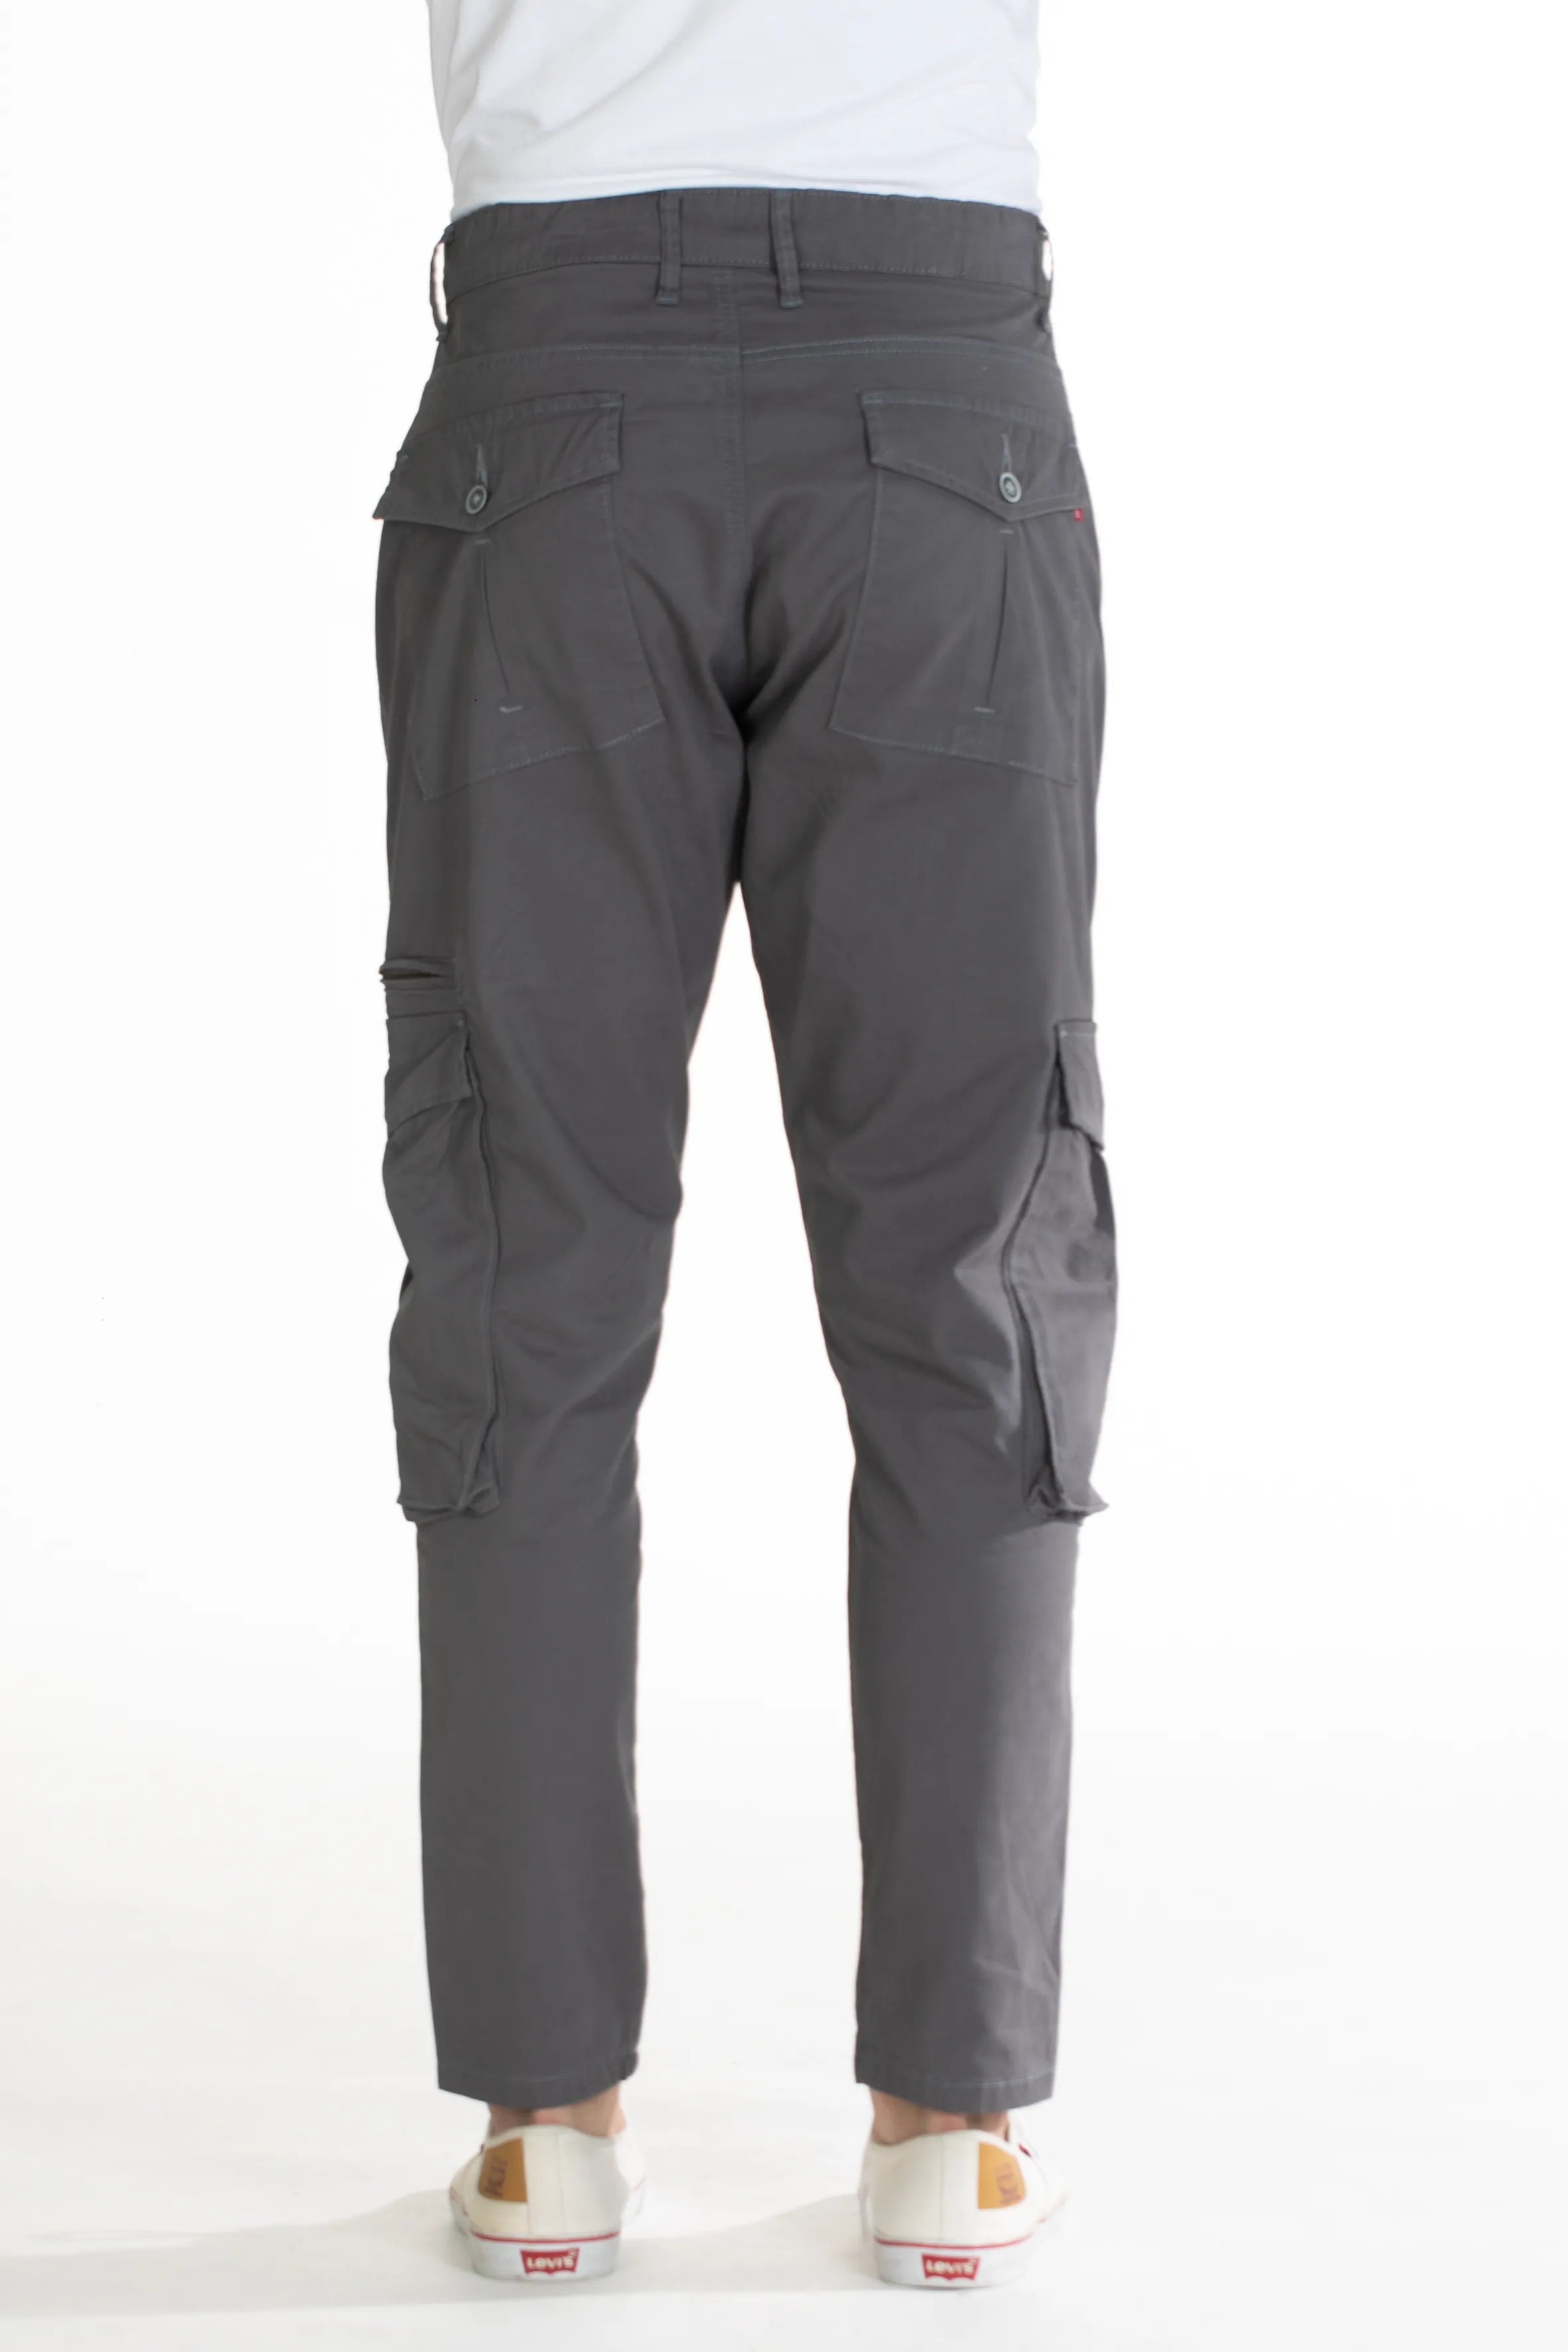 Wrangler Performance Cargo Pants Mens 42x30 Gray Moisture Wicking Stretch  New | eBay